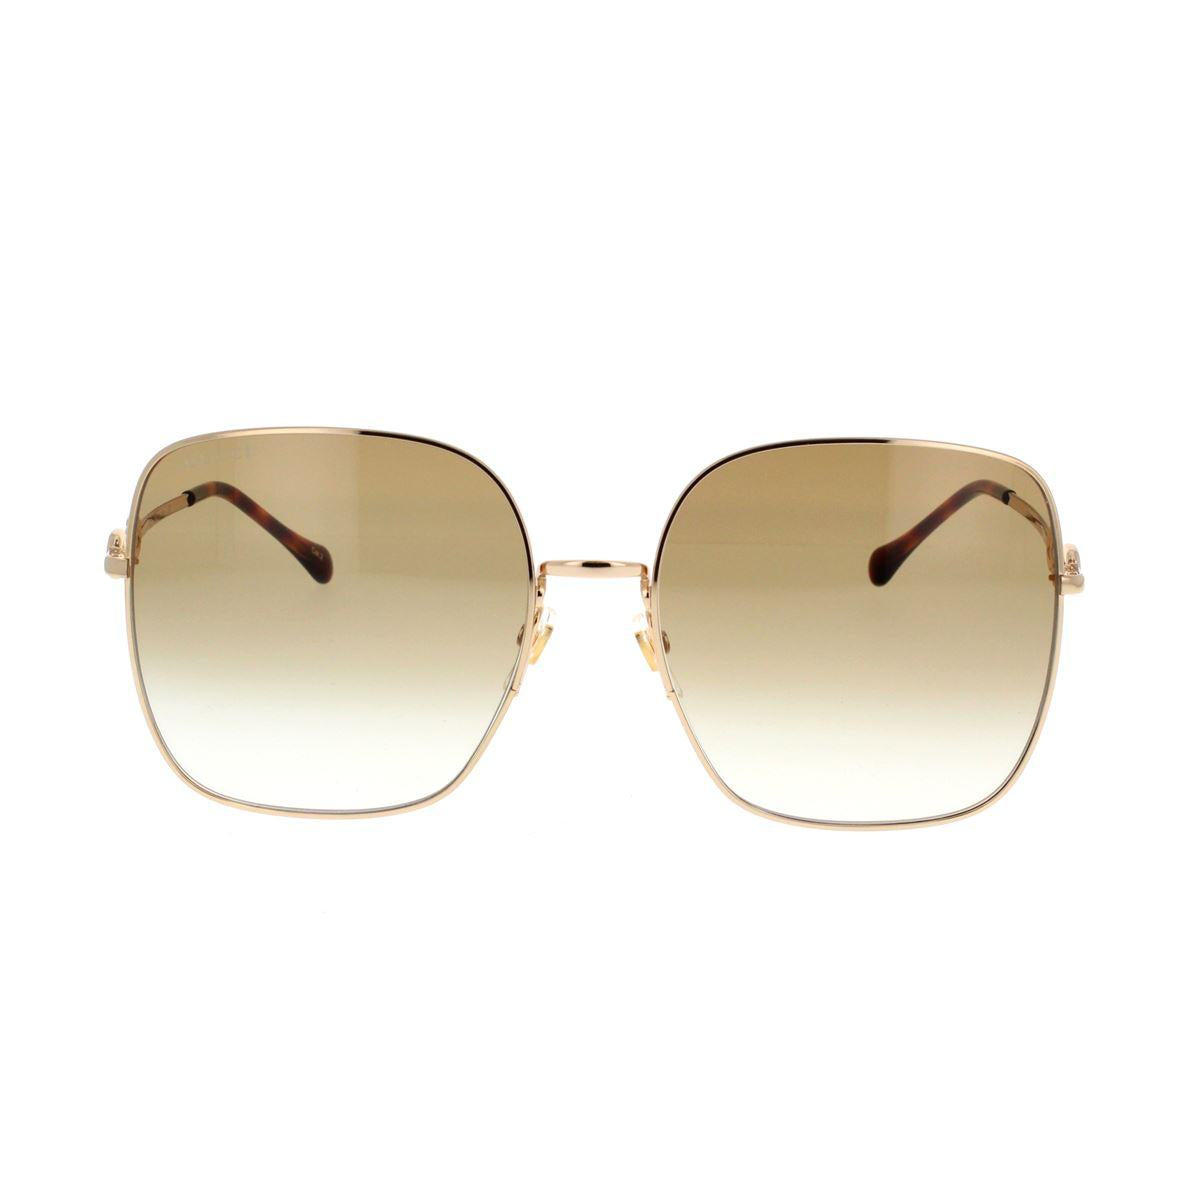 Gucci Eyewear Sunglasses In Neutral